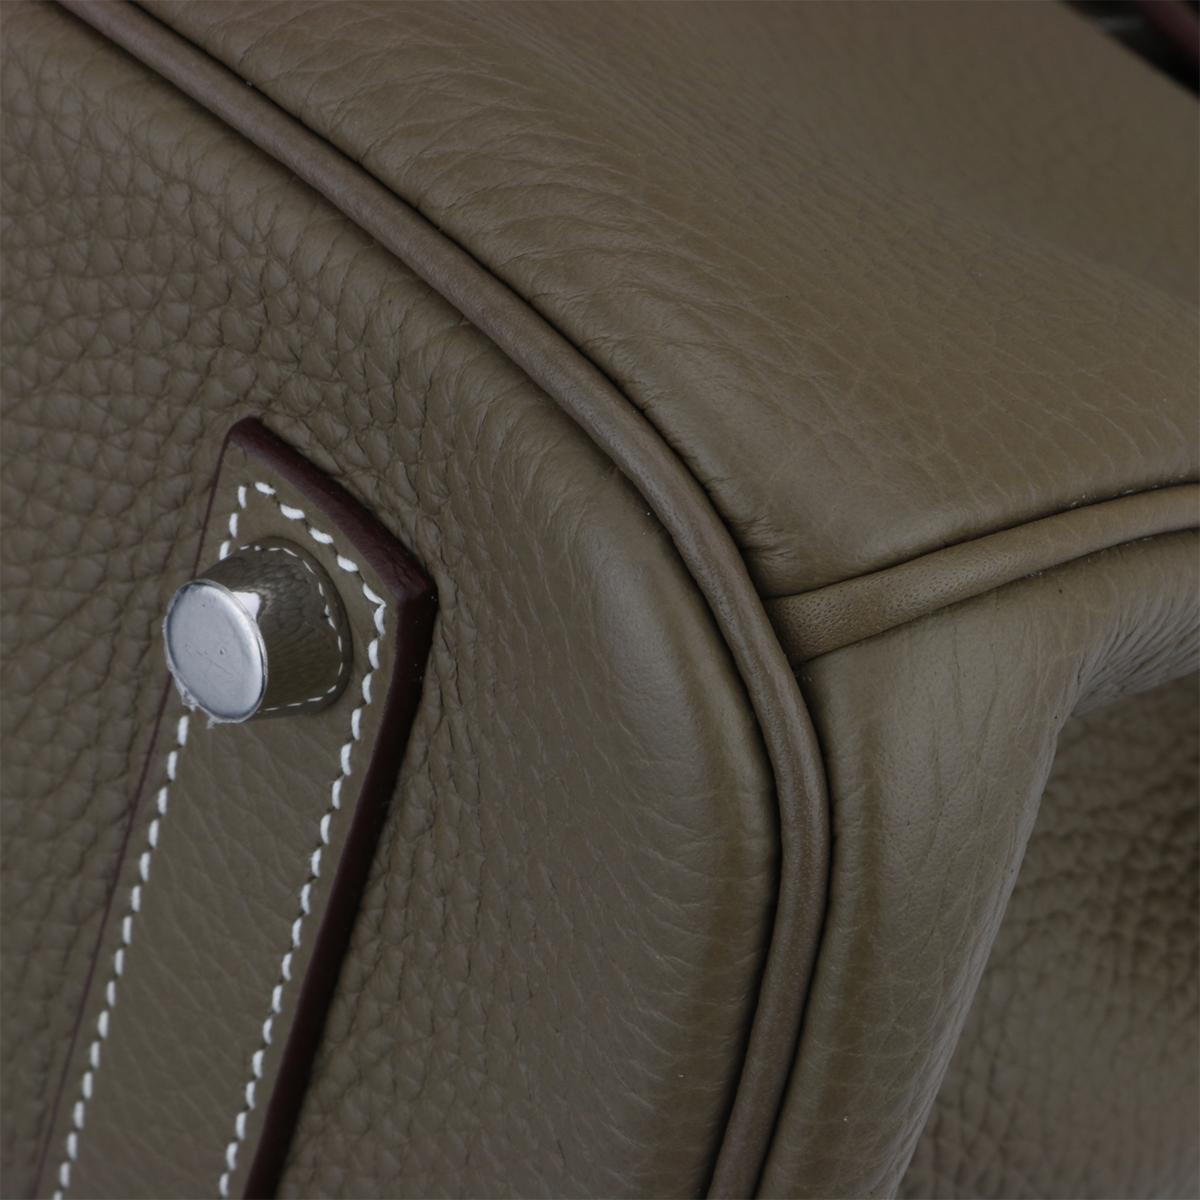 Hermès Birkin 35cm Bag Etoupe Togo Leather with Palladium Hardware Stamp C 2018 2